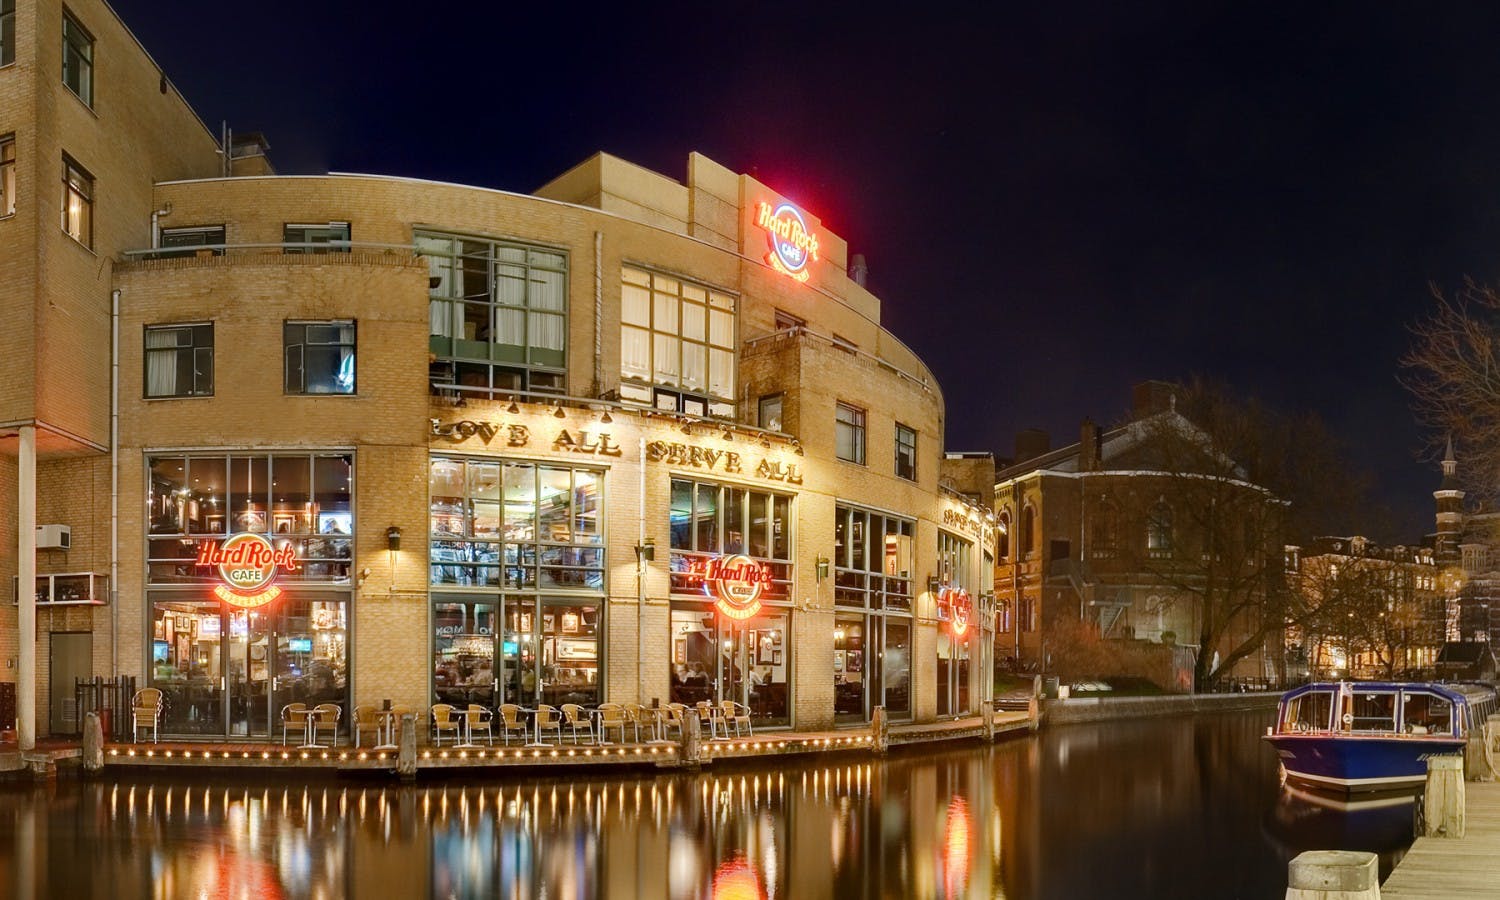 Hard Rock Cafe Amsterdam: posti a sedere prioritari con menu